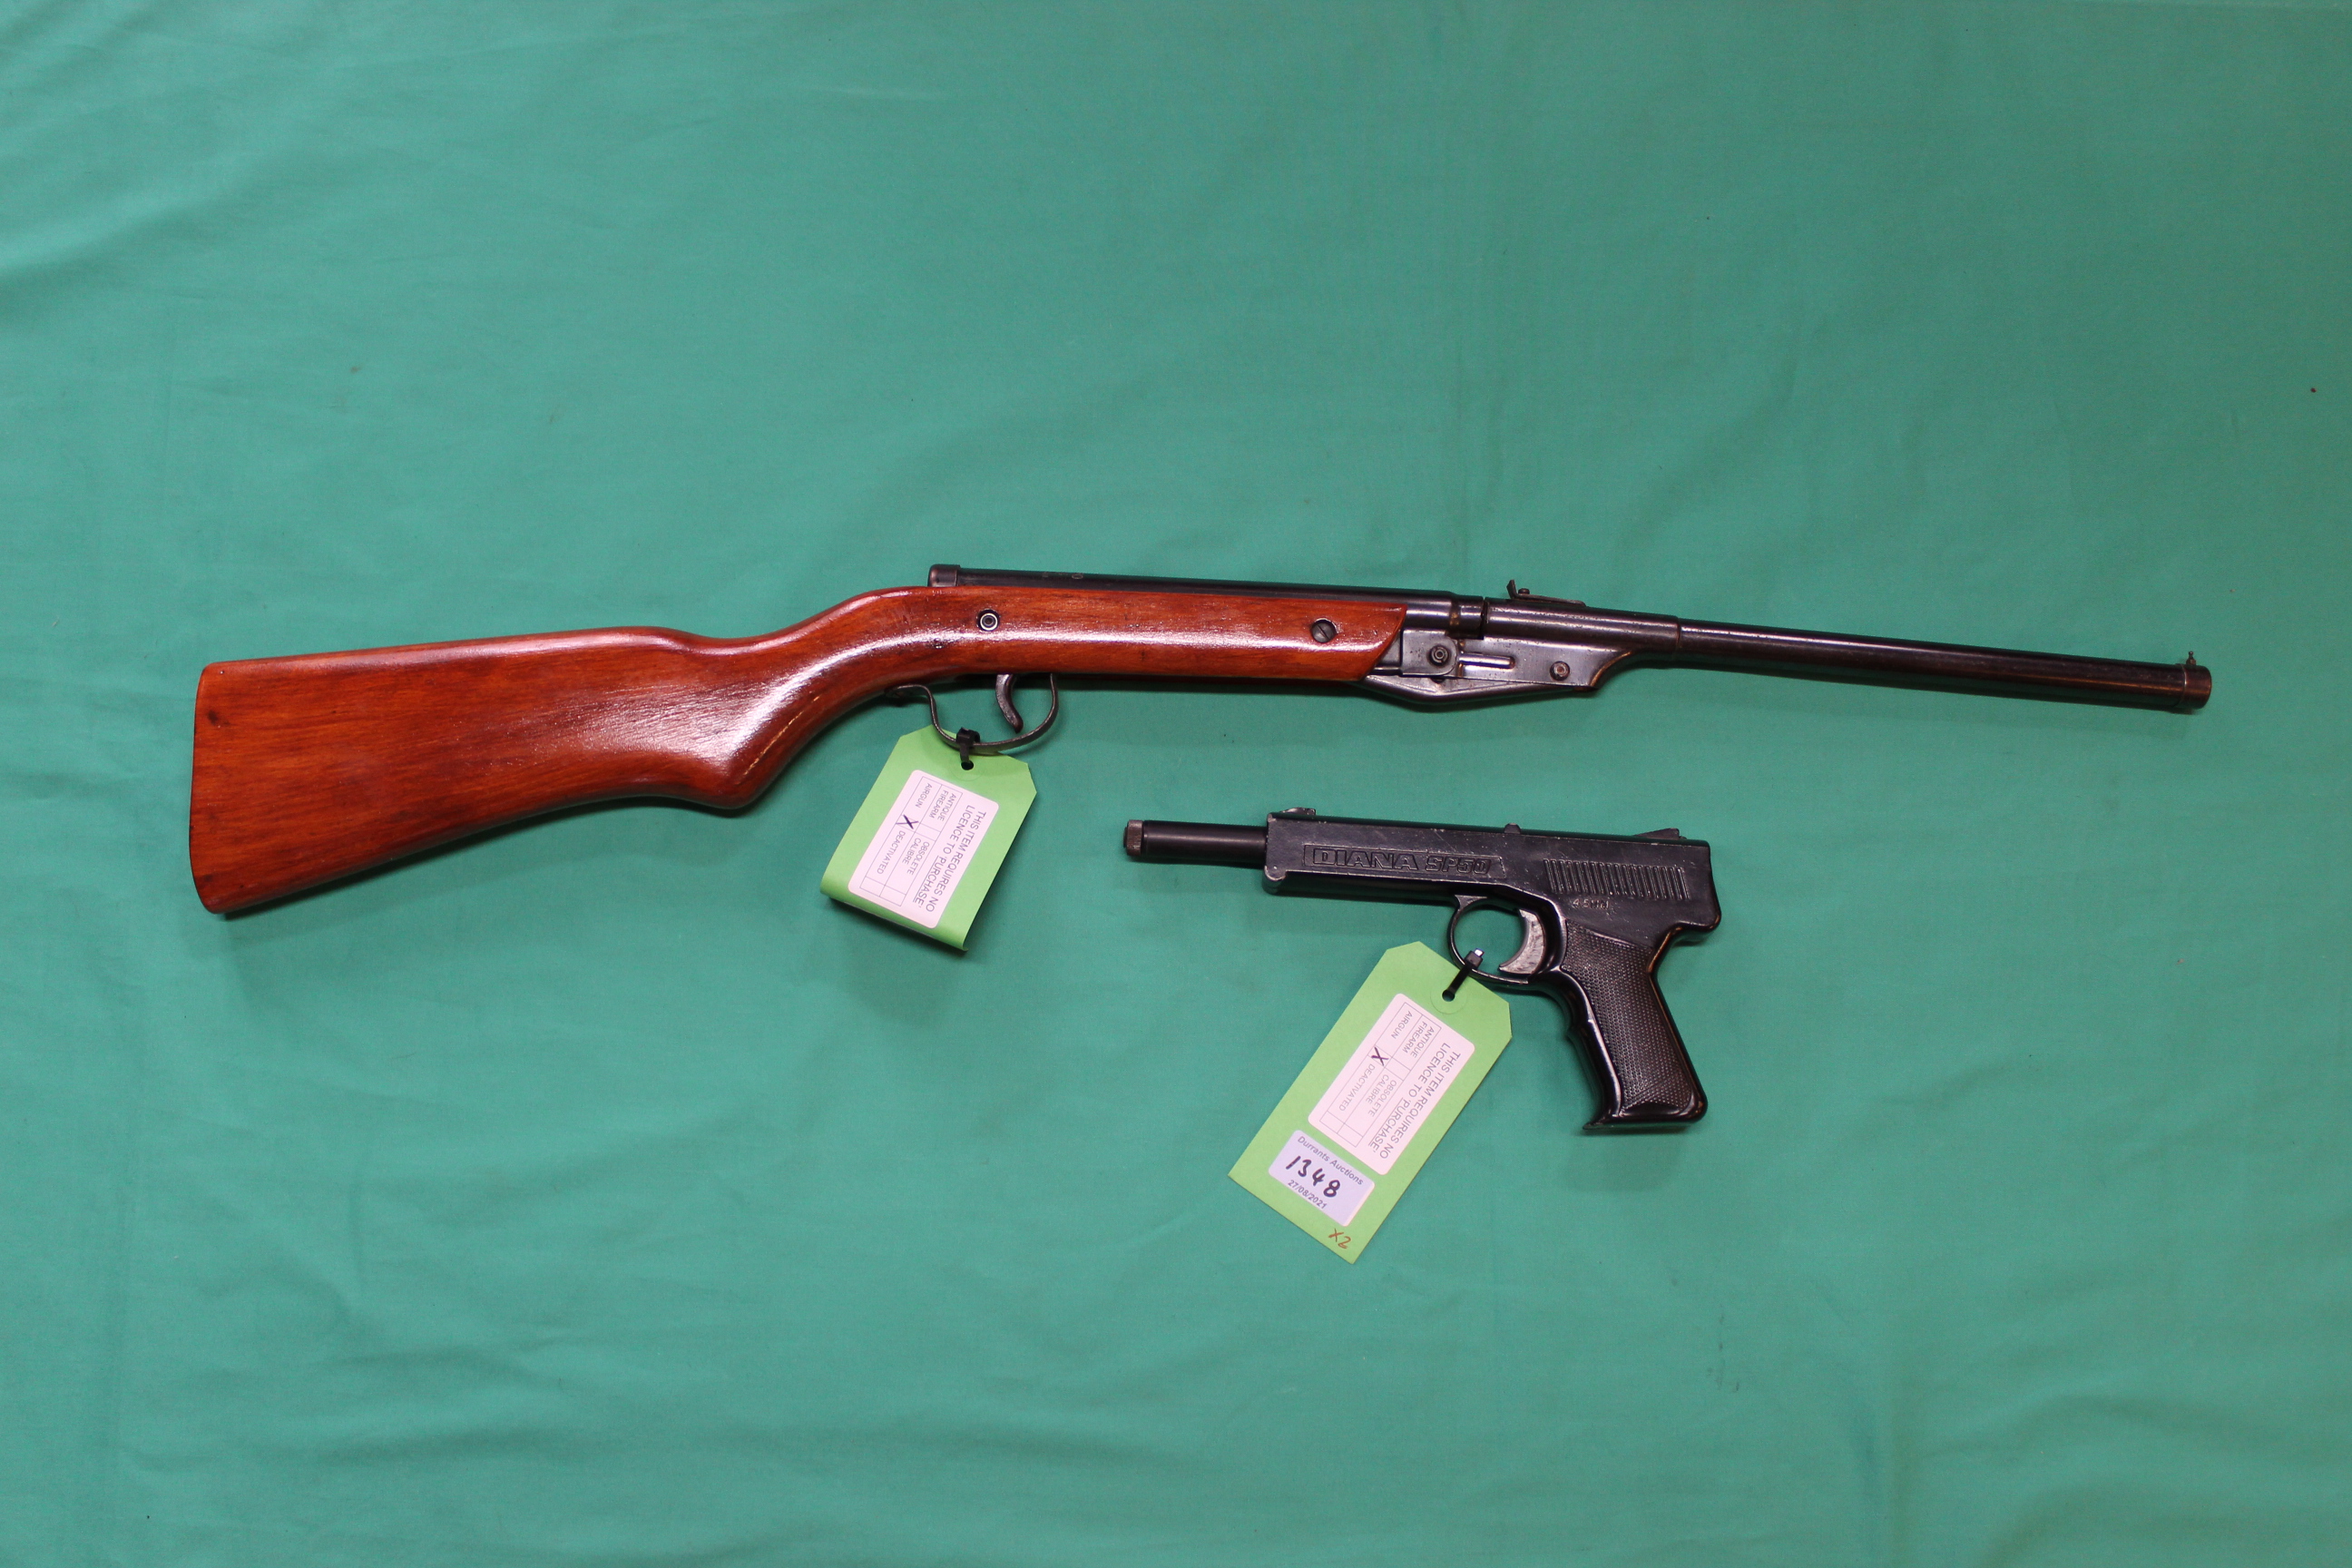 A Milbro Mod 16 air rifle, made 1971 with a Diana SP50 air pistol,